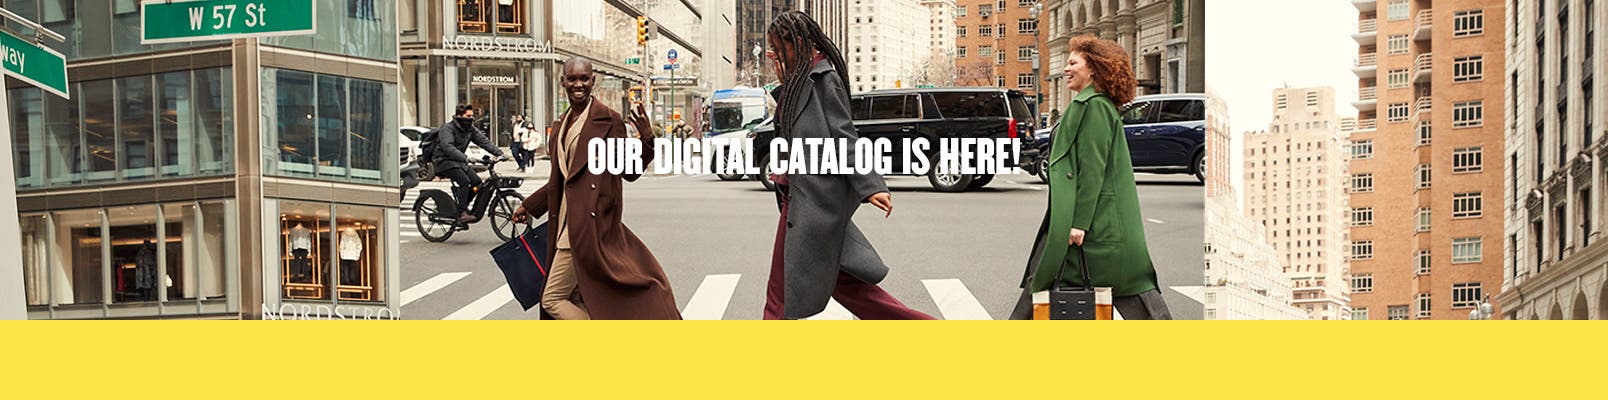 Anniversary Sale: our digital catalog is here! Three women cross a street.